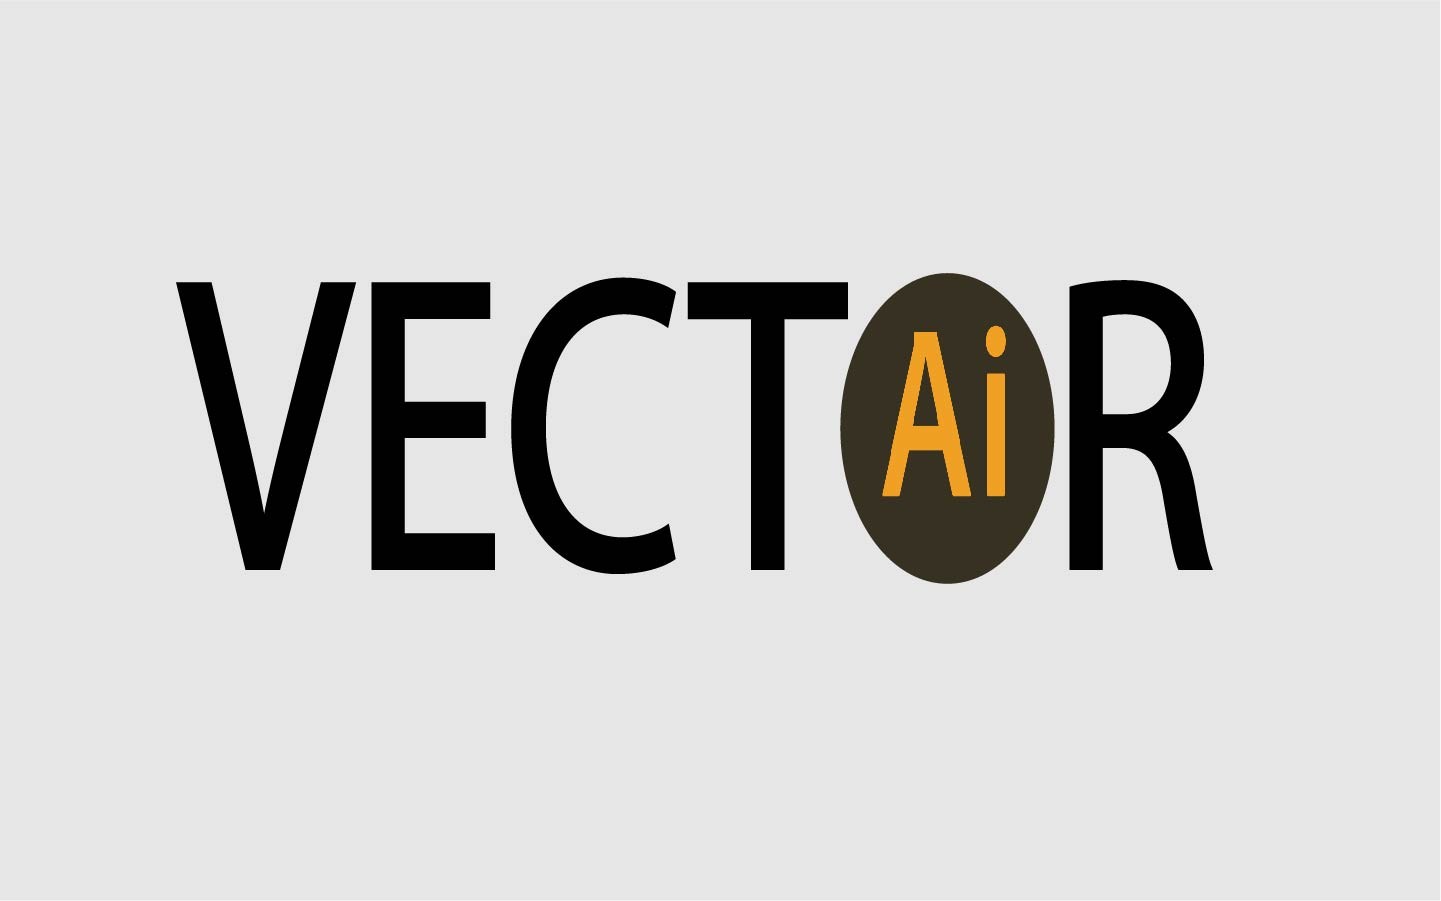 Vector Image